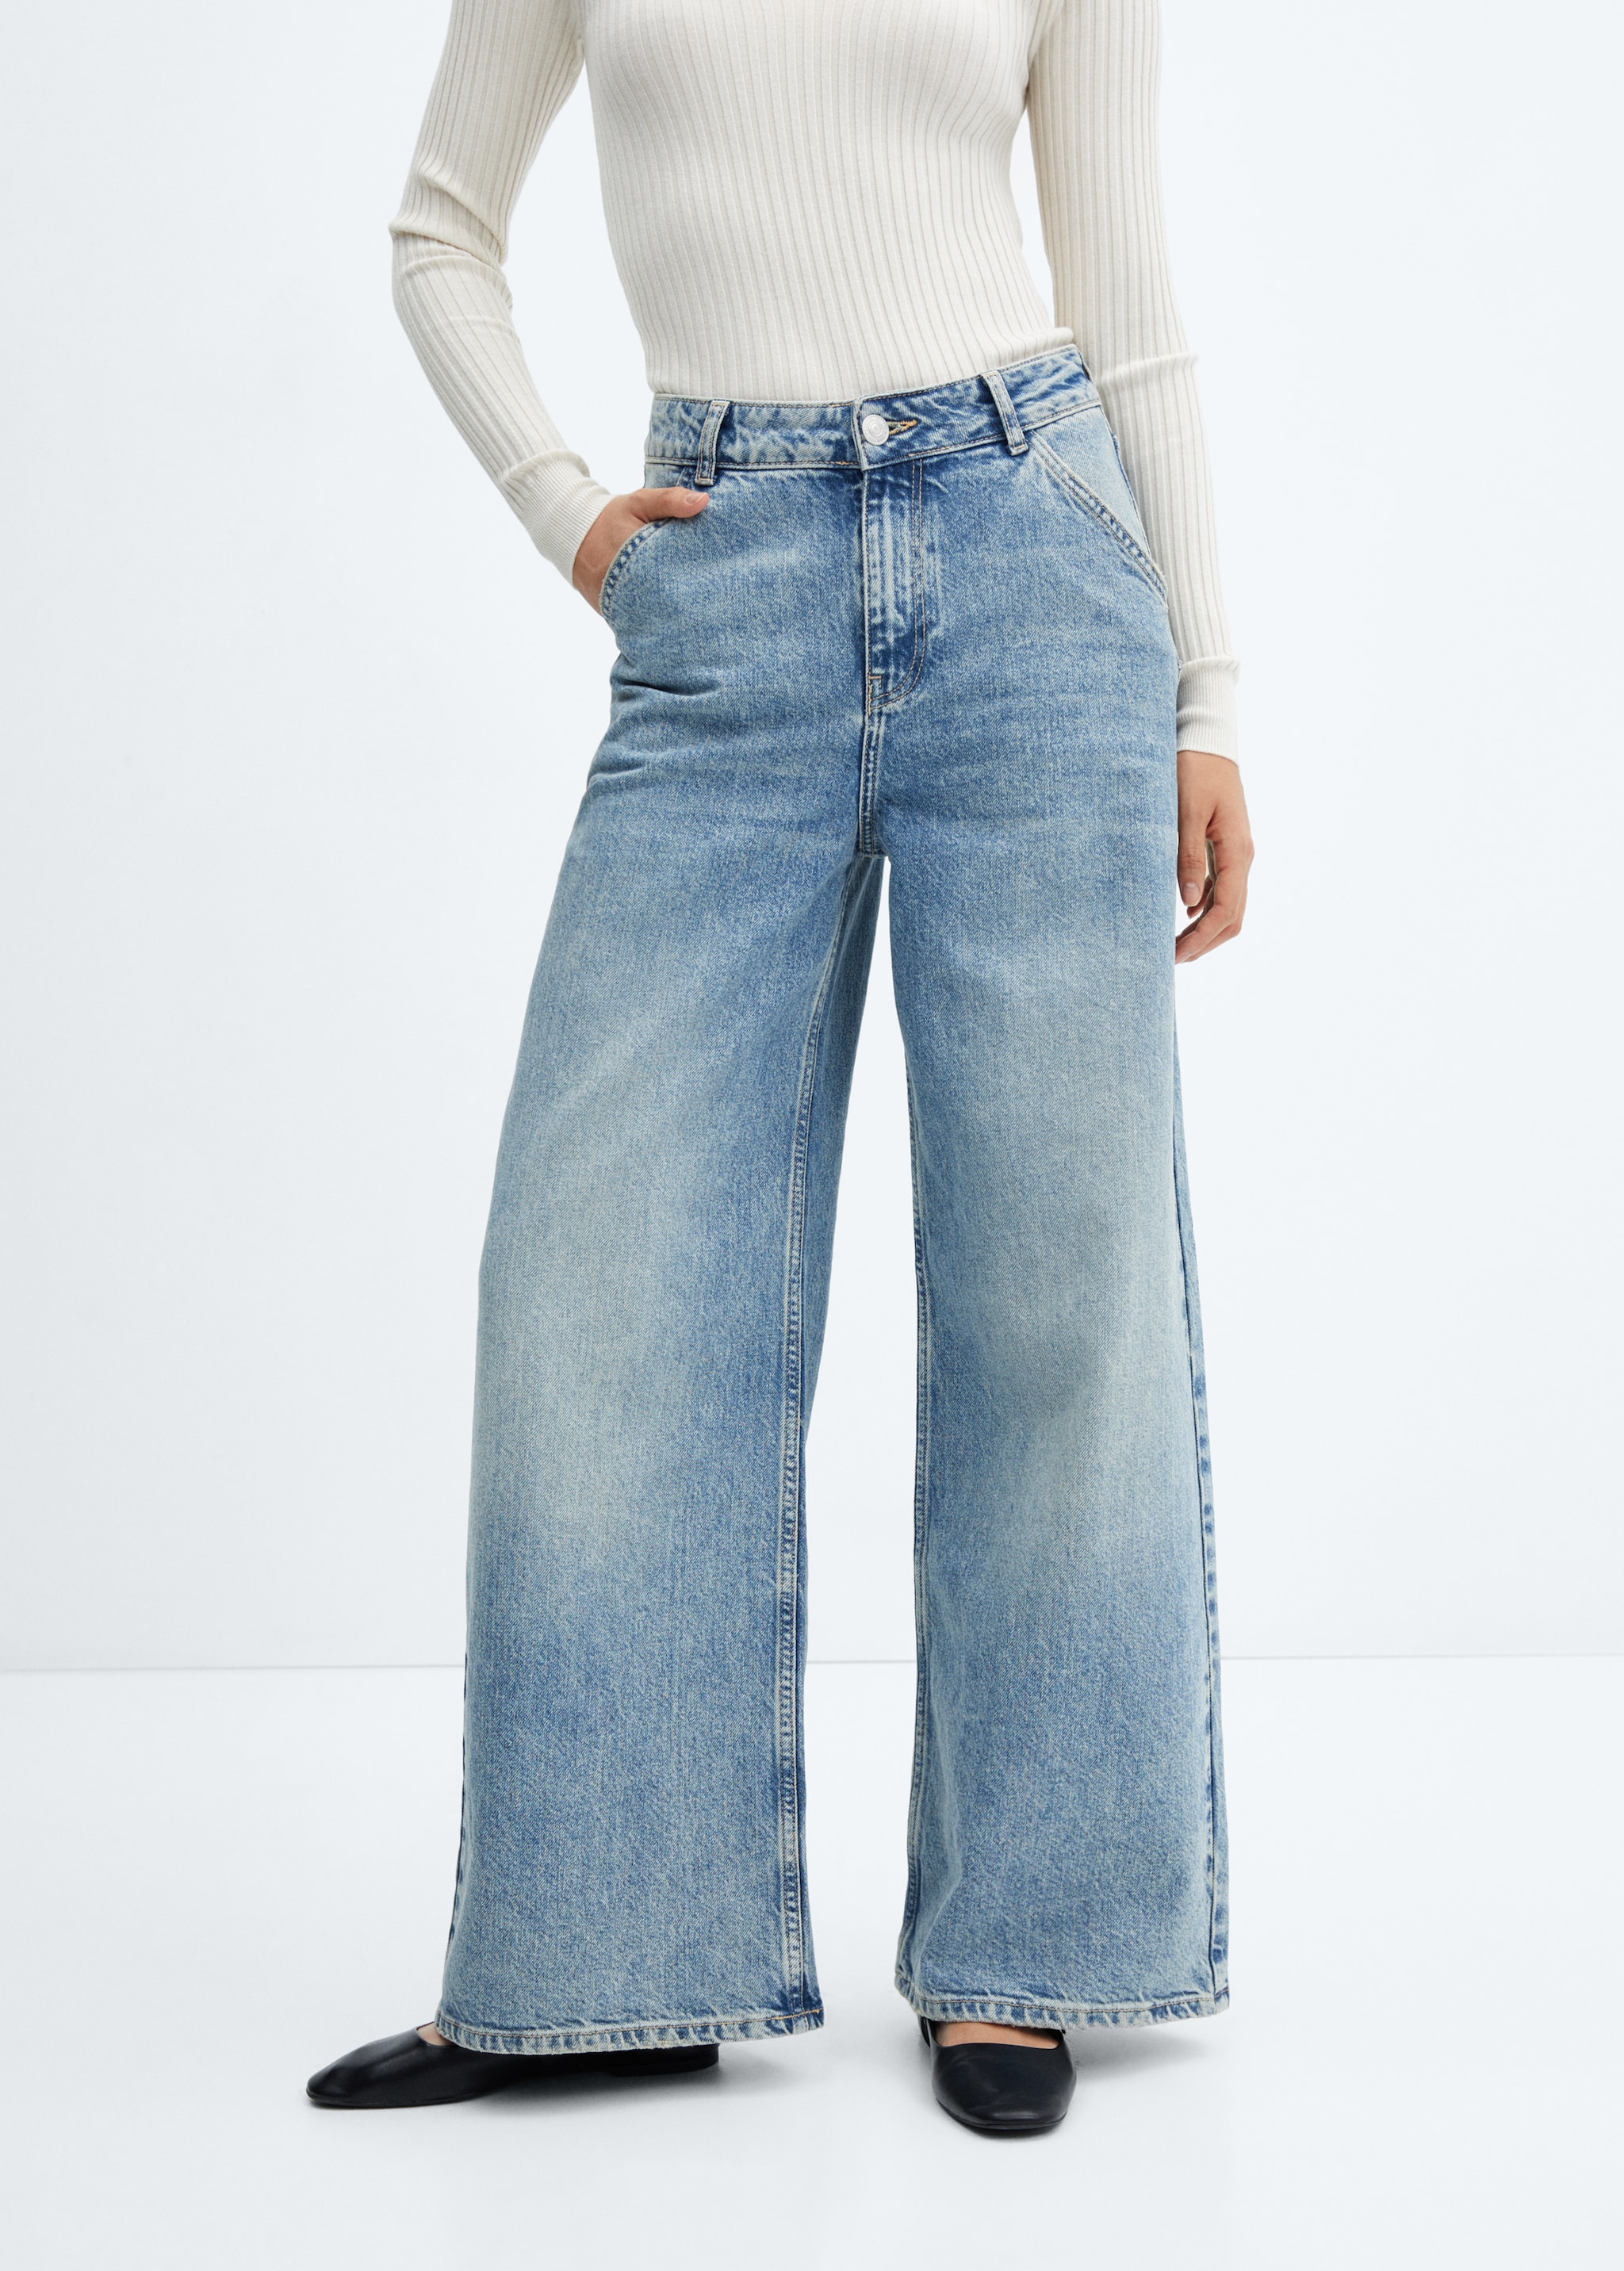 Jeans wideleg tiro medio - Plano medio